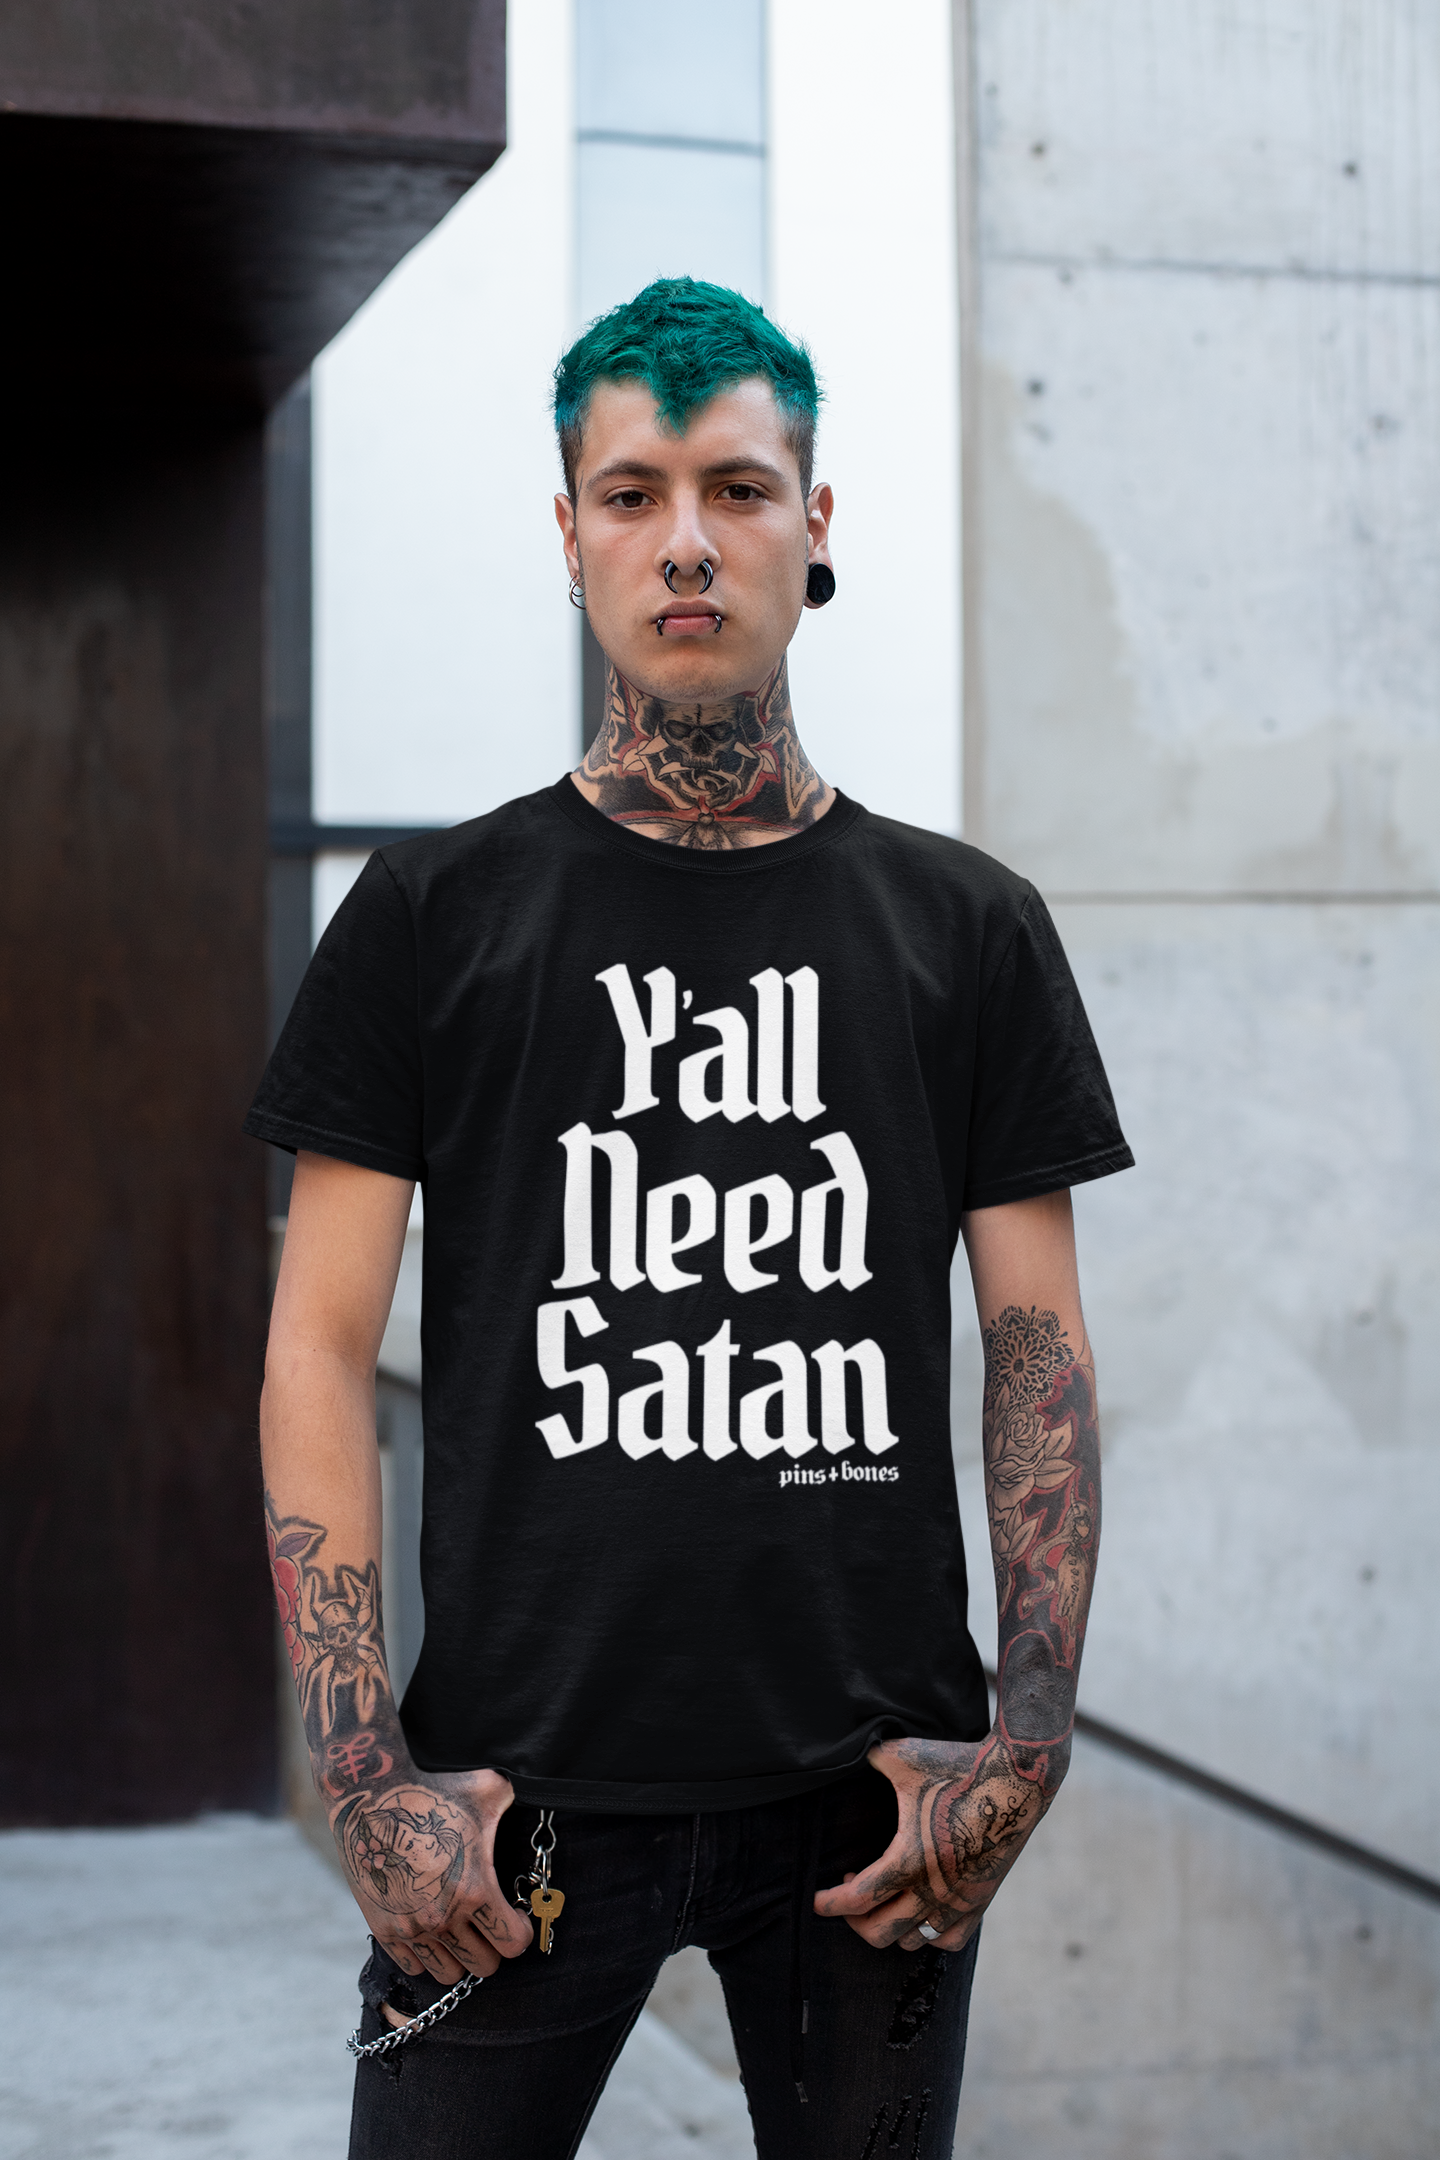 Y'all Need Satan Shirt, Satanic T Shirt, Satan Loves Me, Goth Occult Alt Clothing, Satanism Occult Shirt